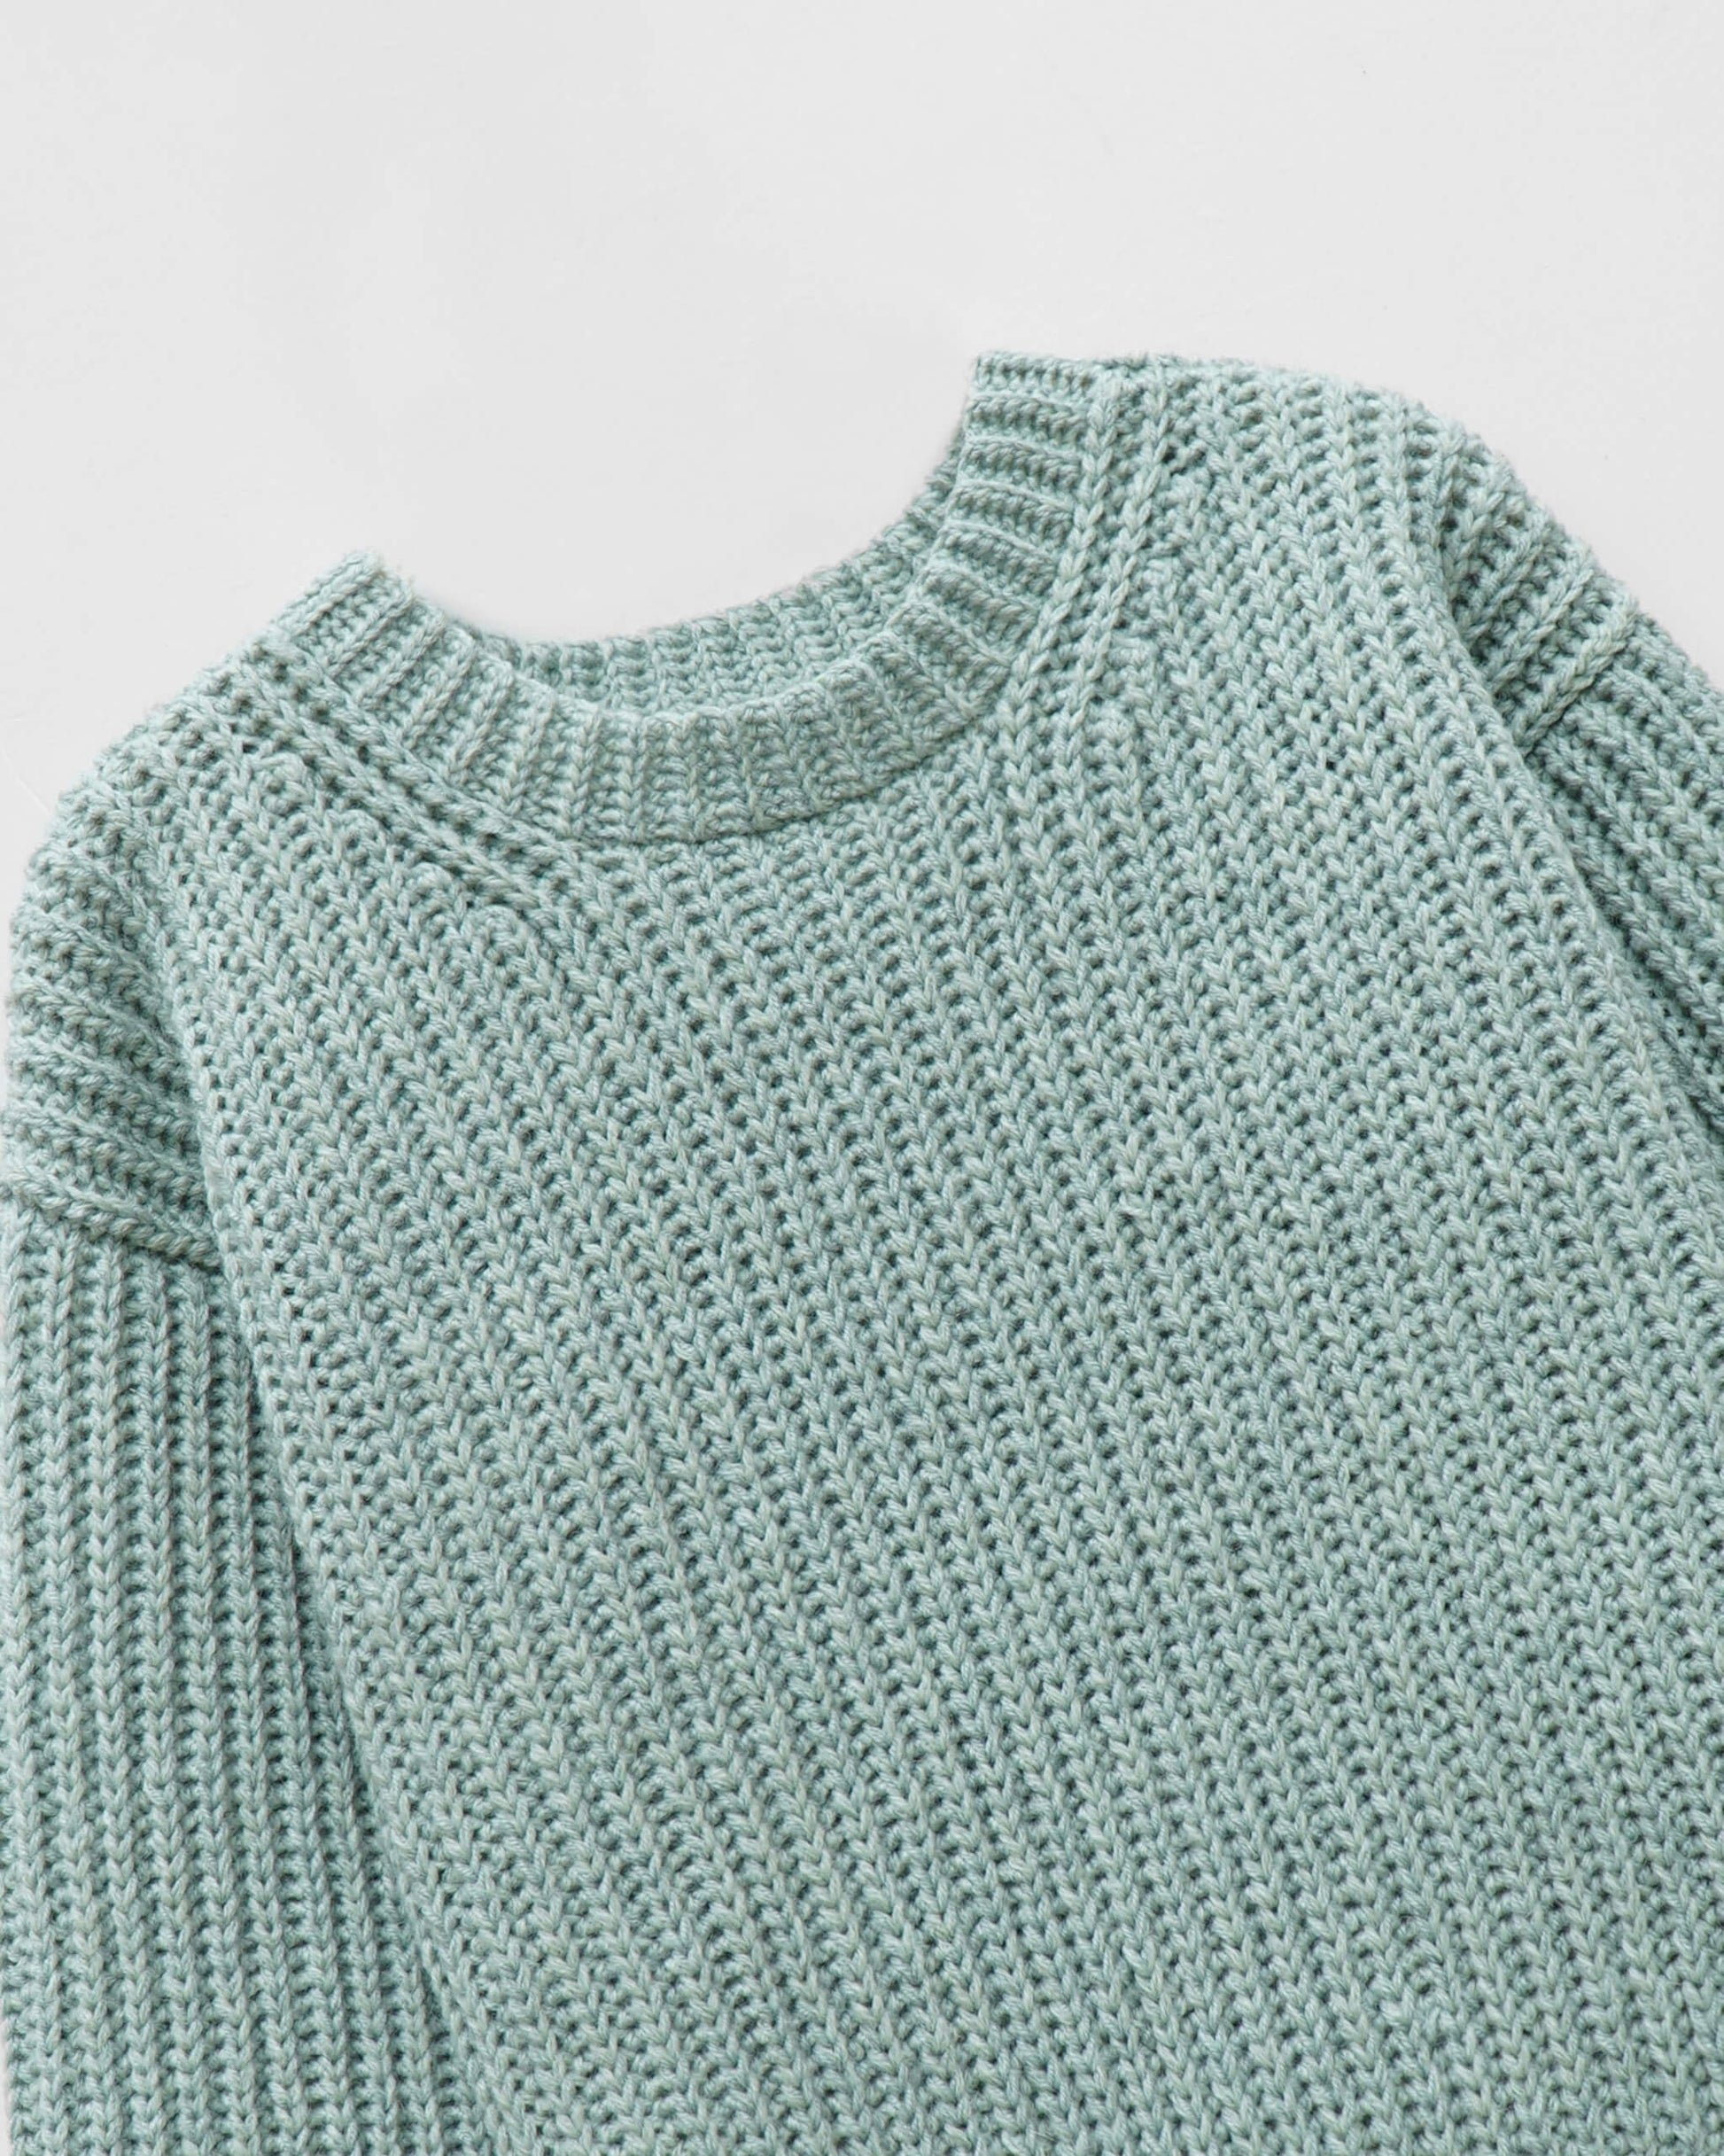 Ribbed sweater crochet pattern